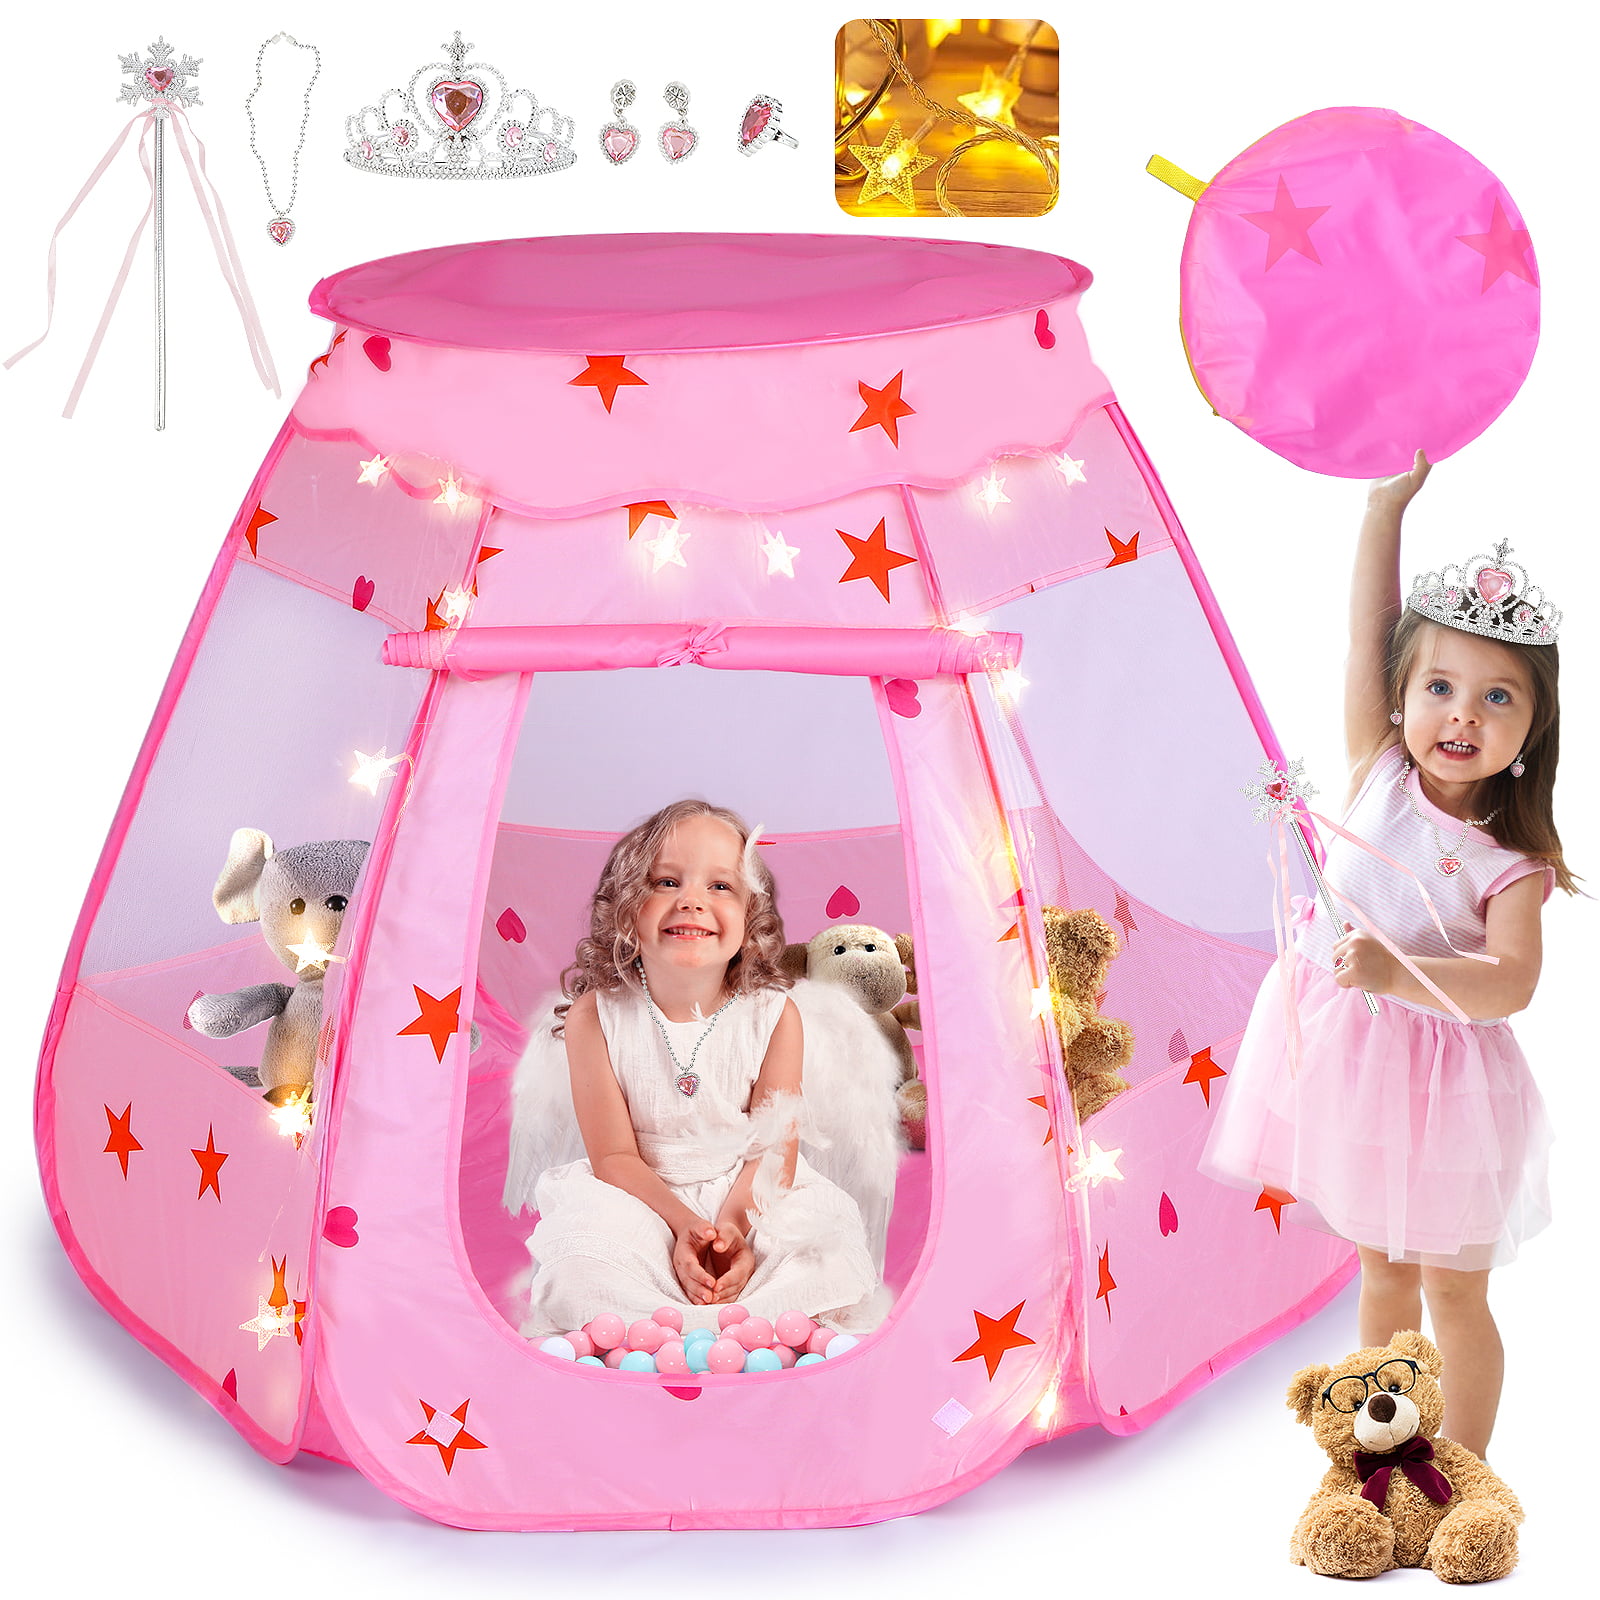 Pink Crown Play Tent Children's Castel Indoor&Outdoor Playhouse Xmas Toy Gift 